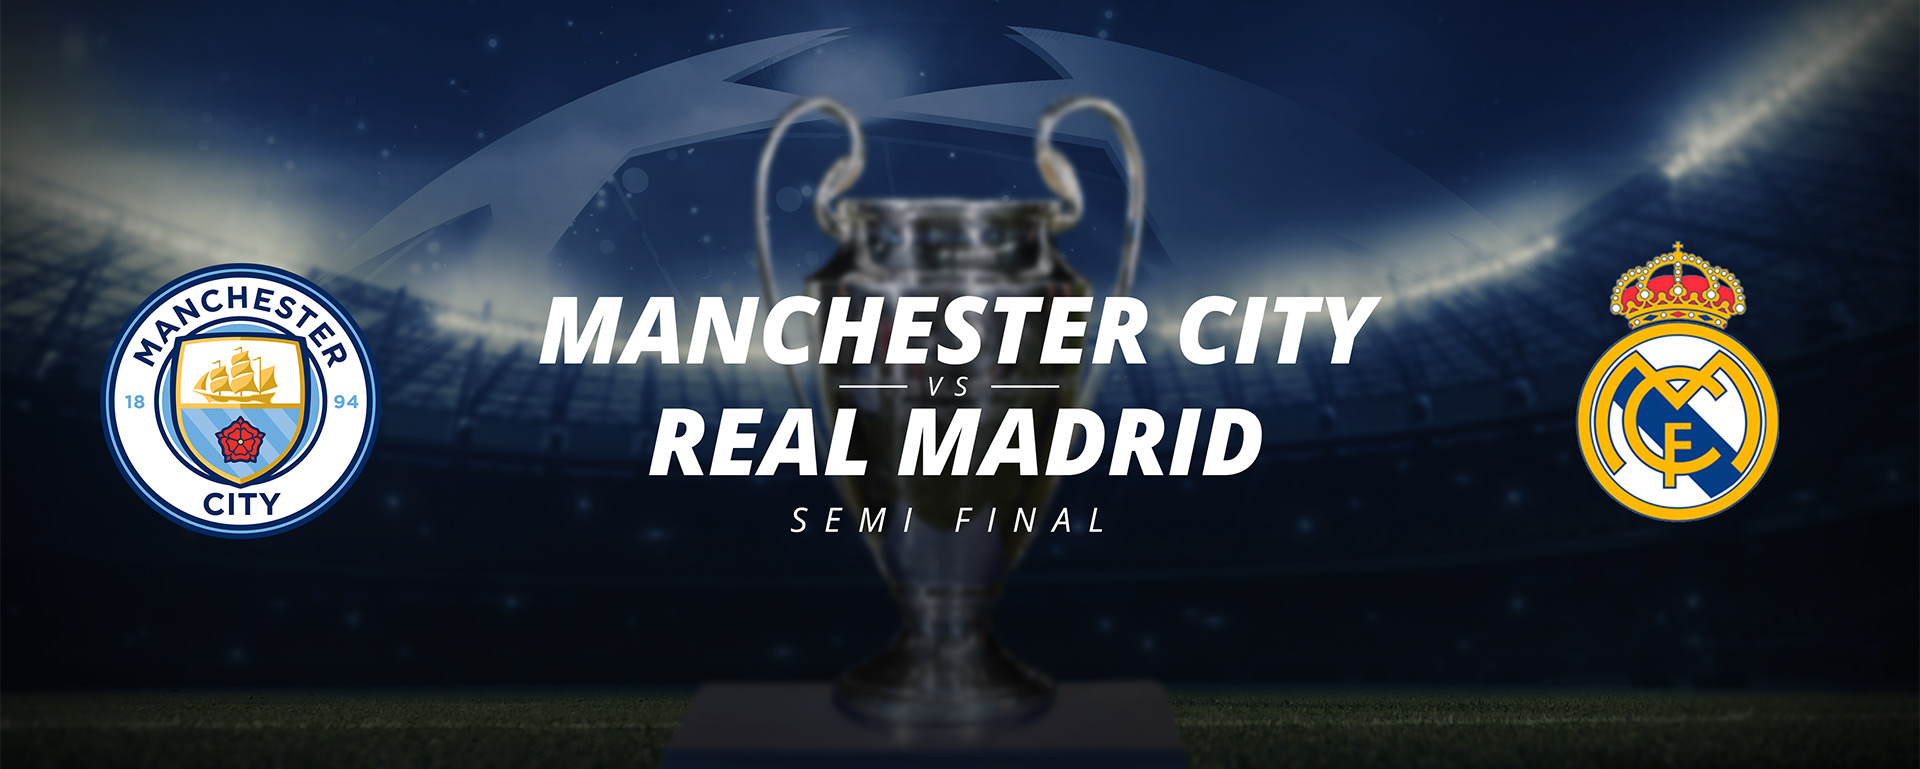 CHAMPIONS LEAGUE SEMI FINAL: MAN CITY V REAL MADRID